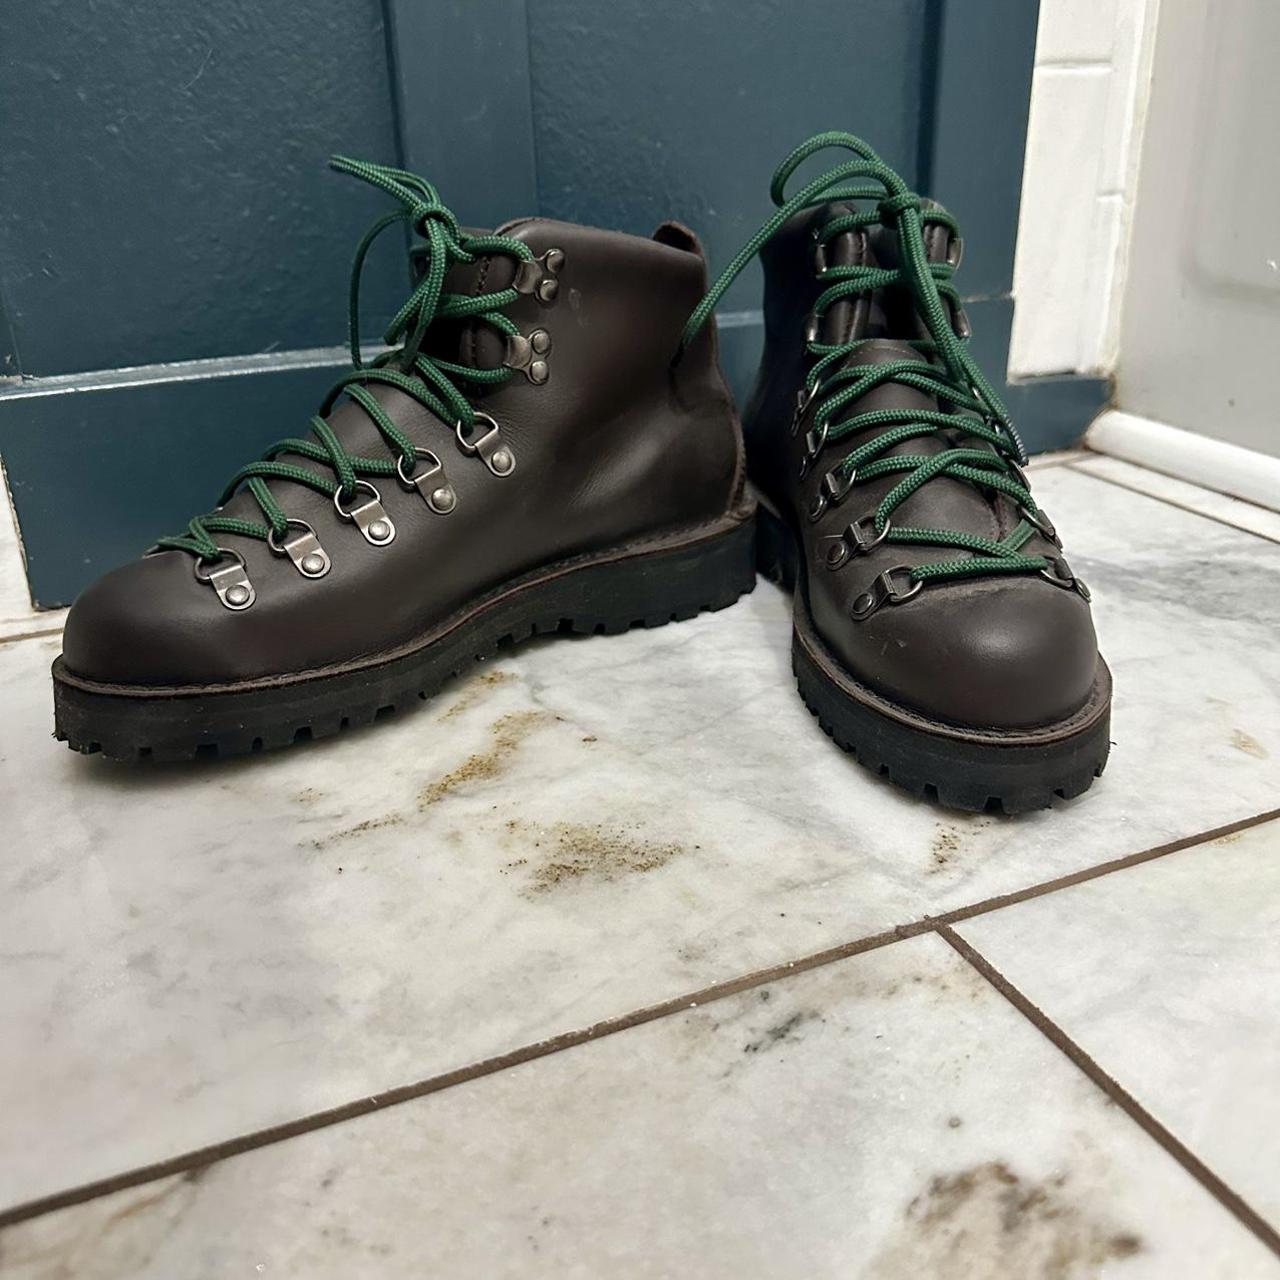 Mountain LT II 5” Danner hiking boots - Depop